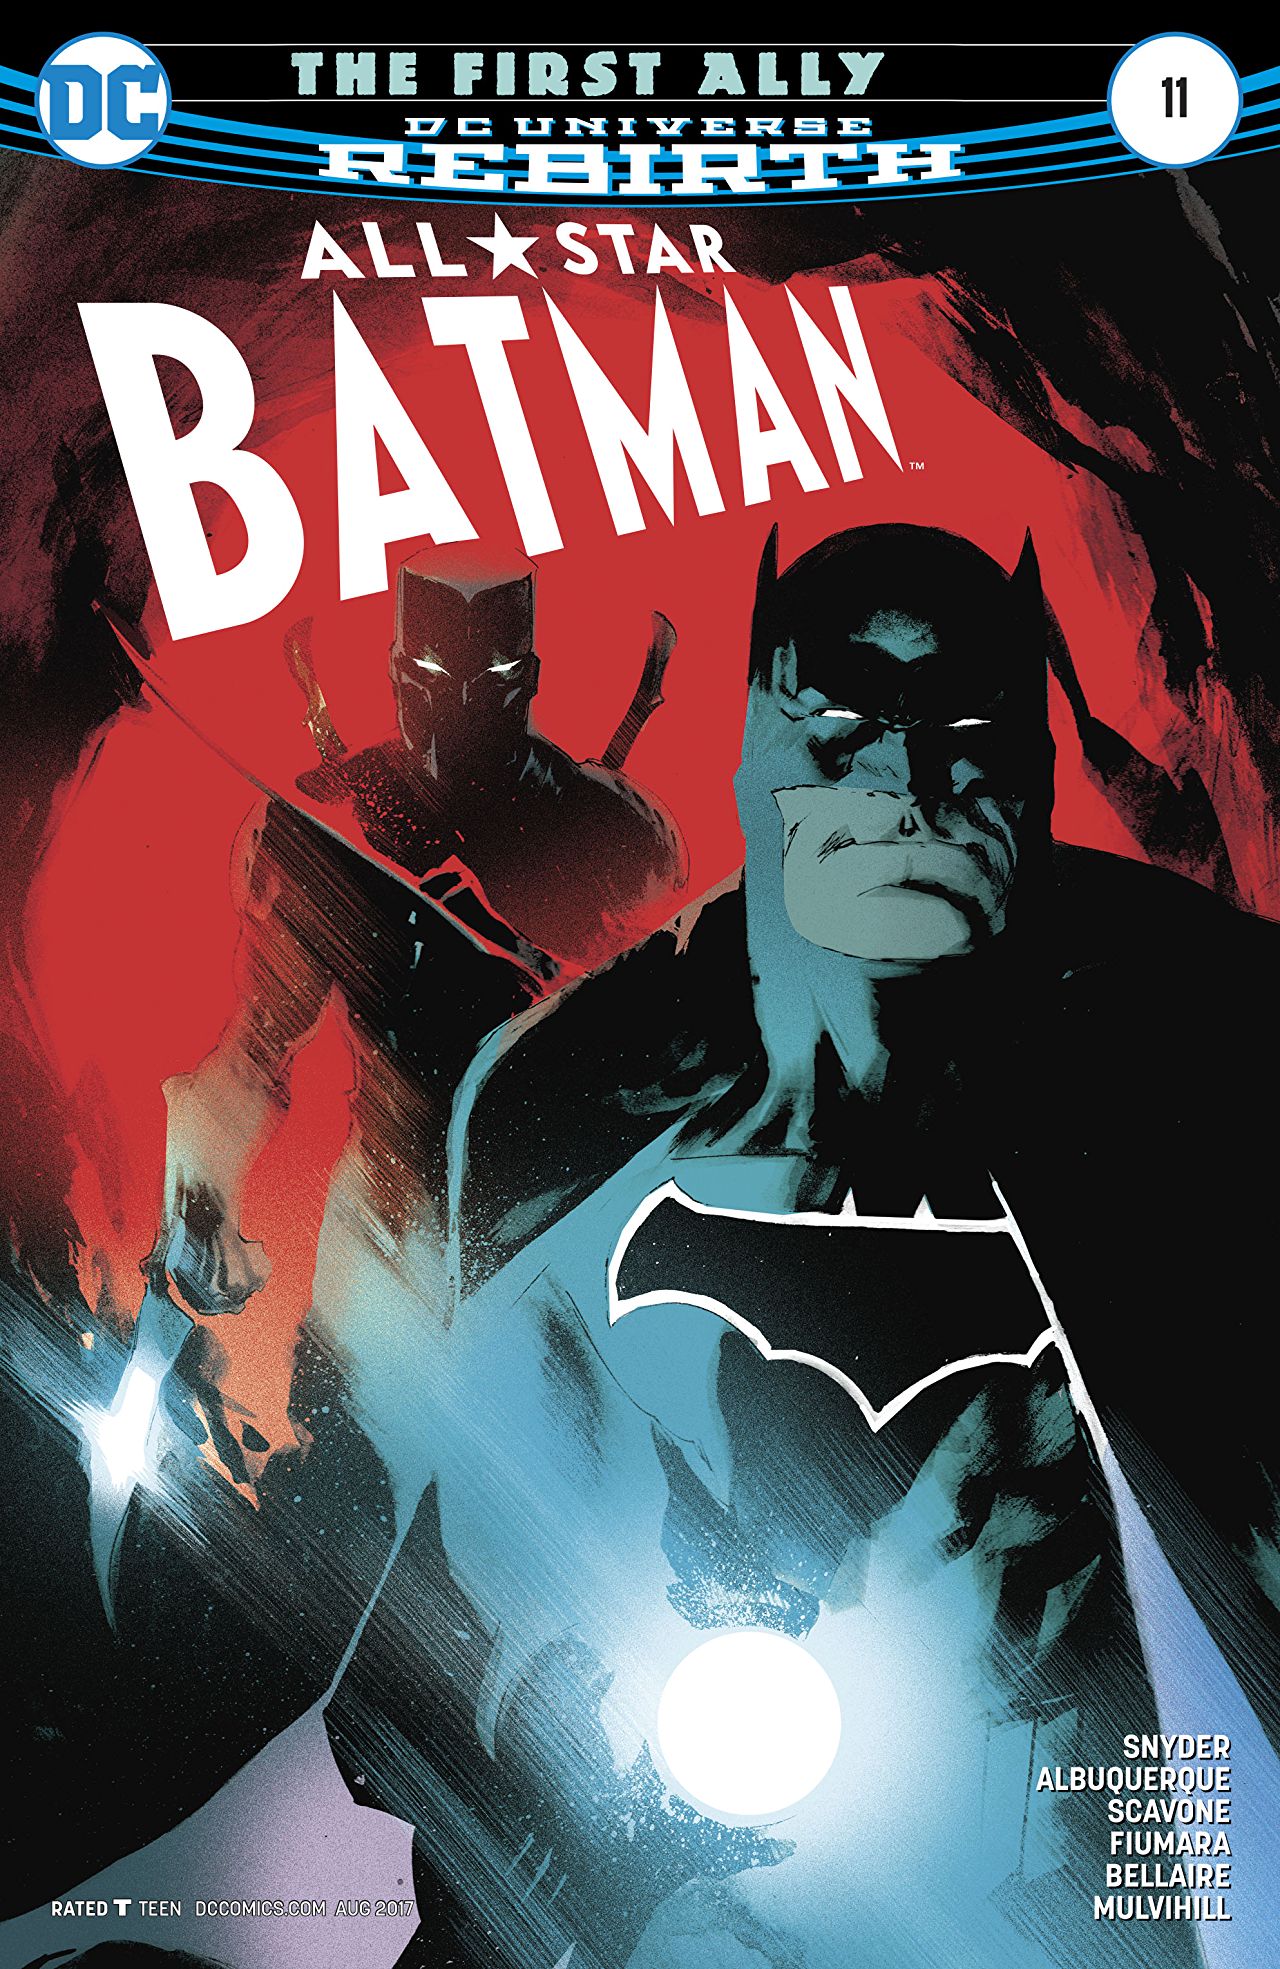 All-Star Batman #11 Review